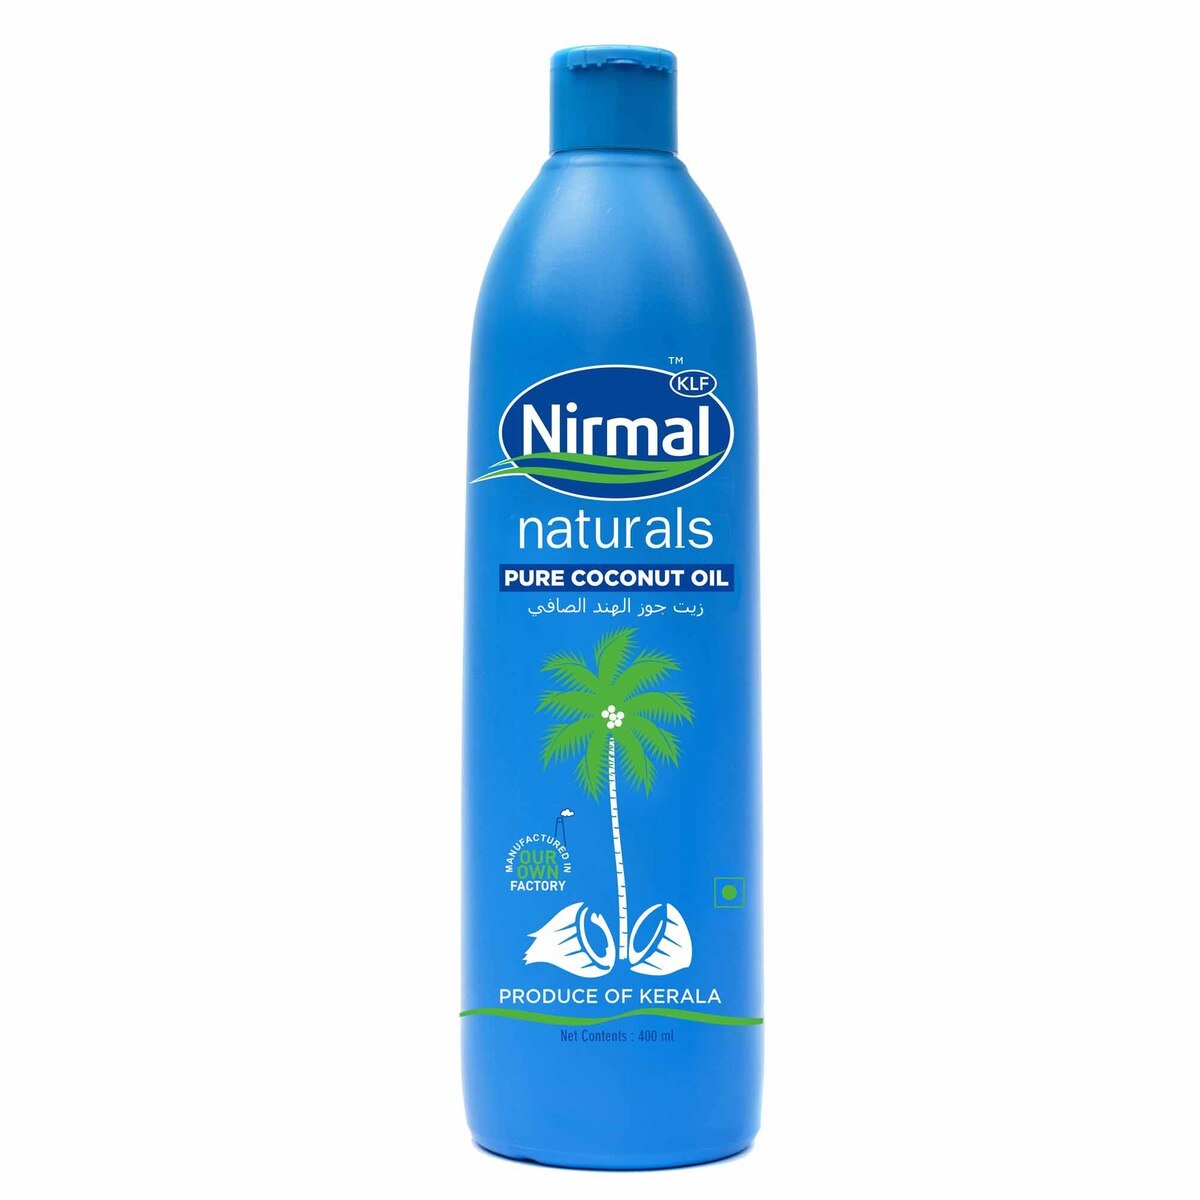 KLF Nirmal Pure Coconut Oil Natural 400ml